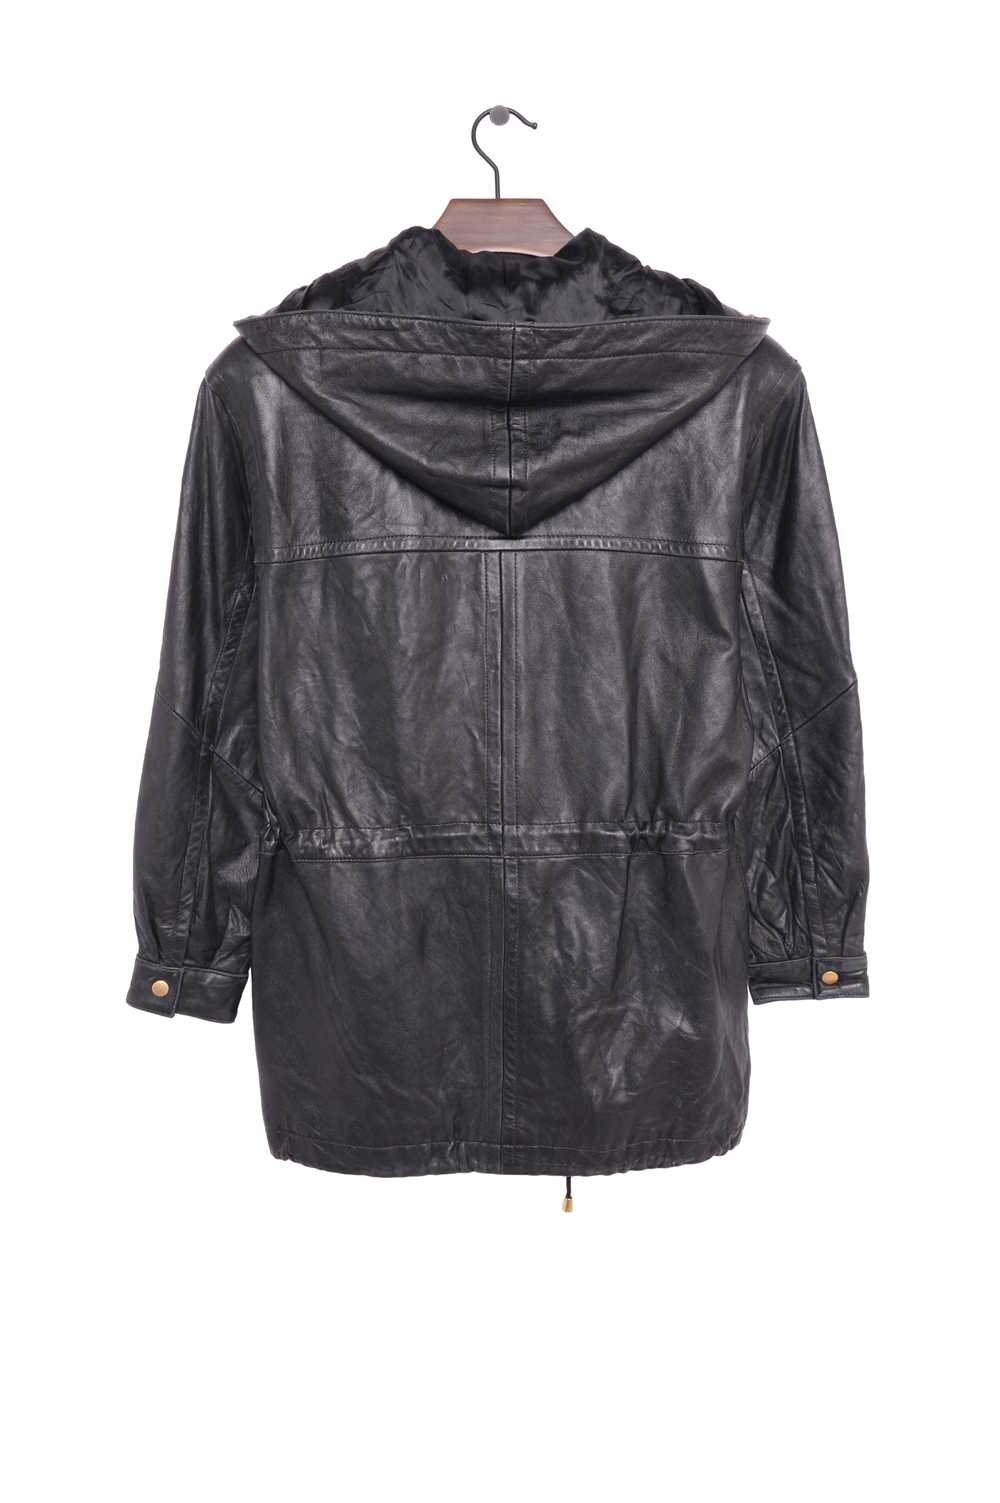 1990s Leather Duffle Coat - image 2